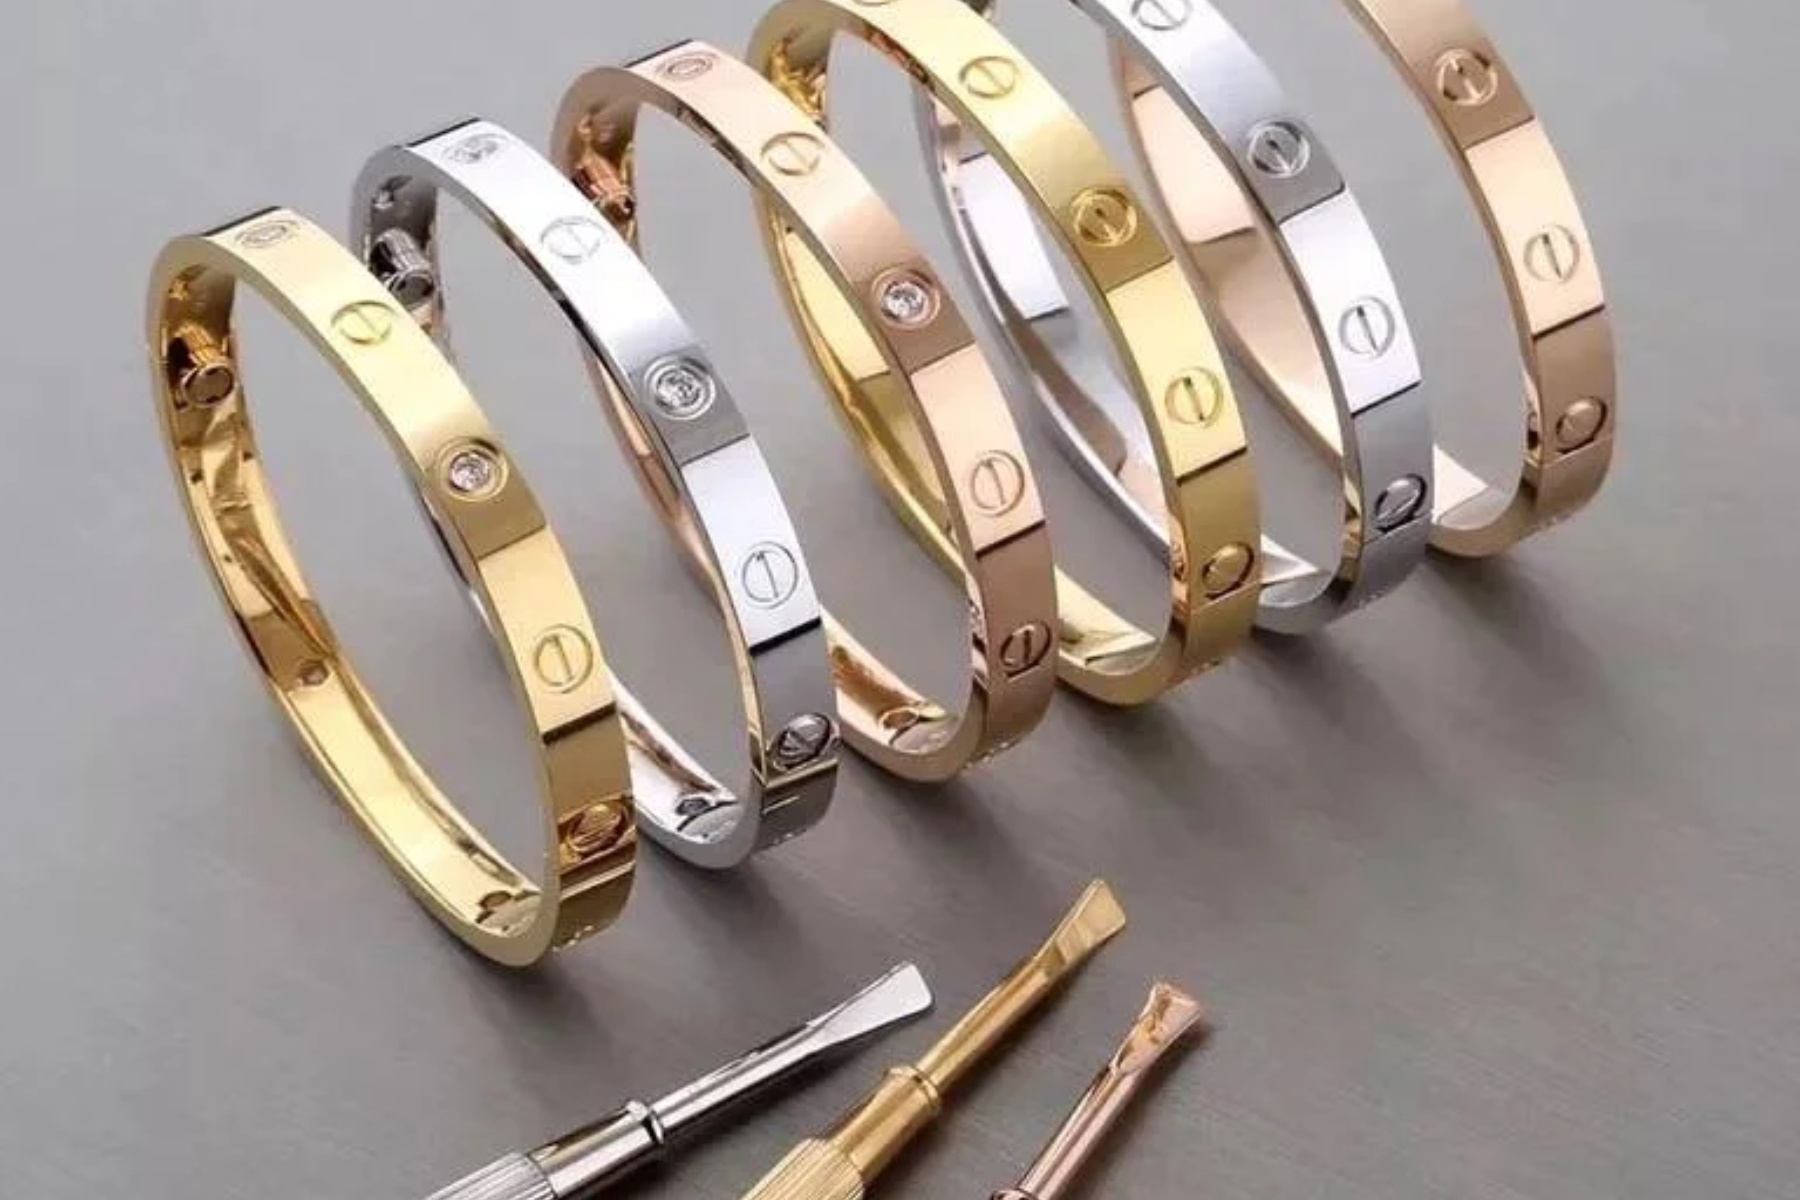 Six designer bracelets